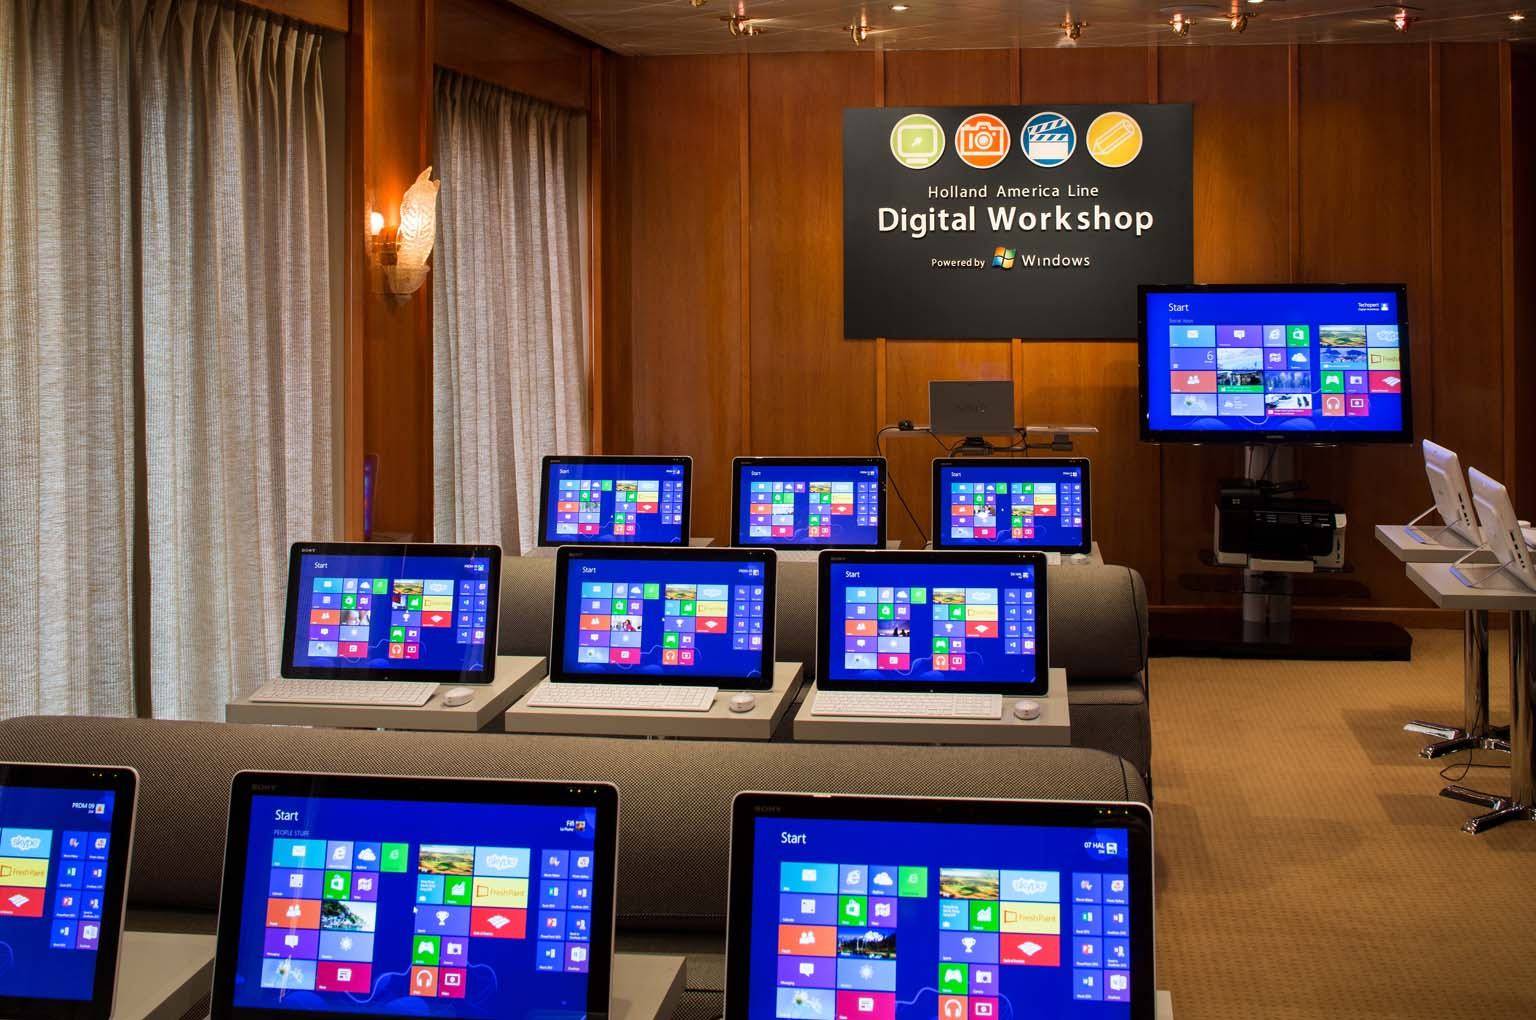 Digital Workshop